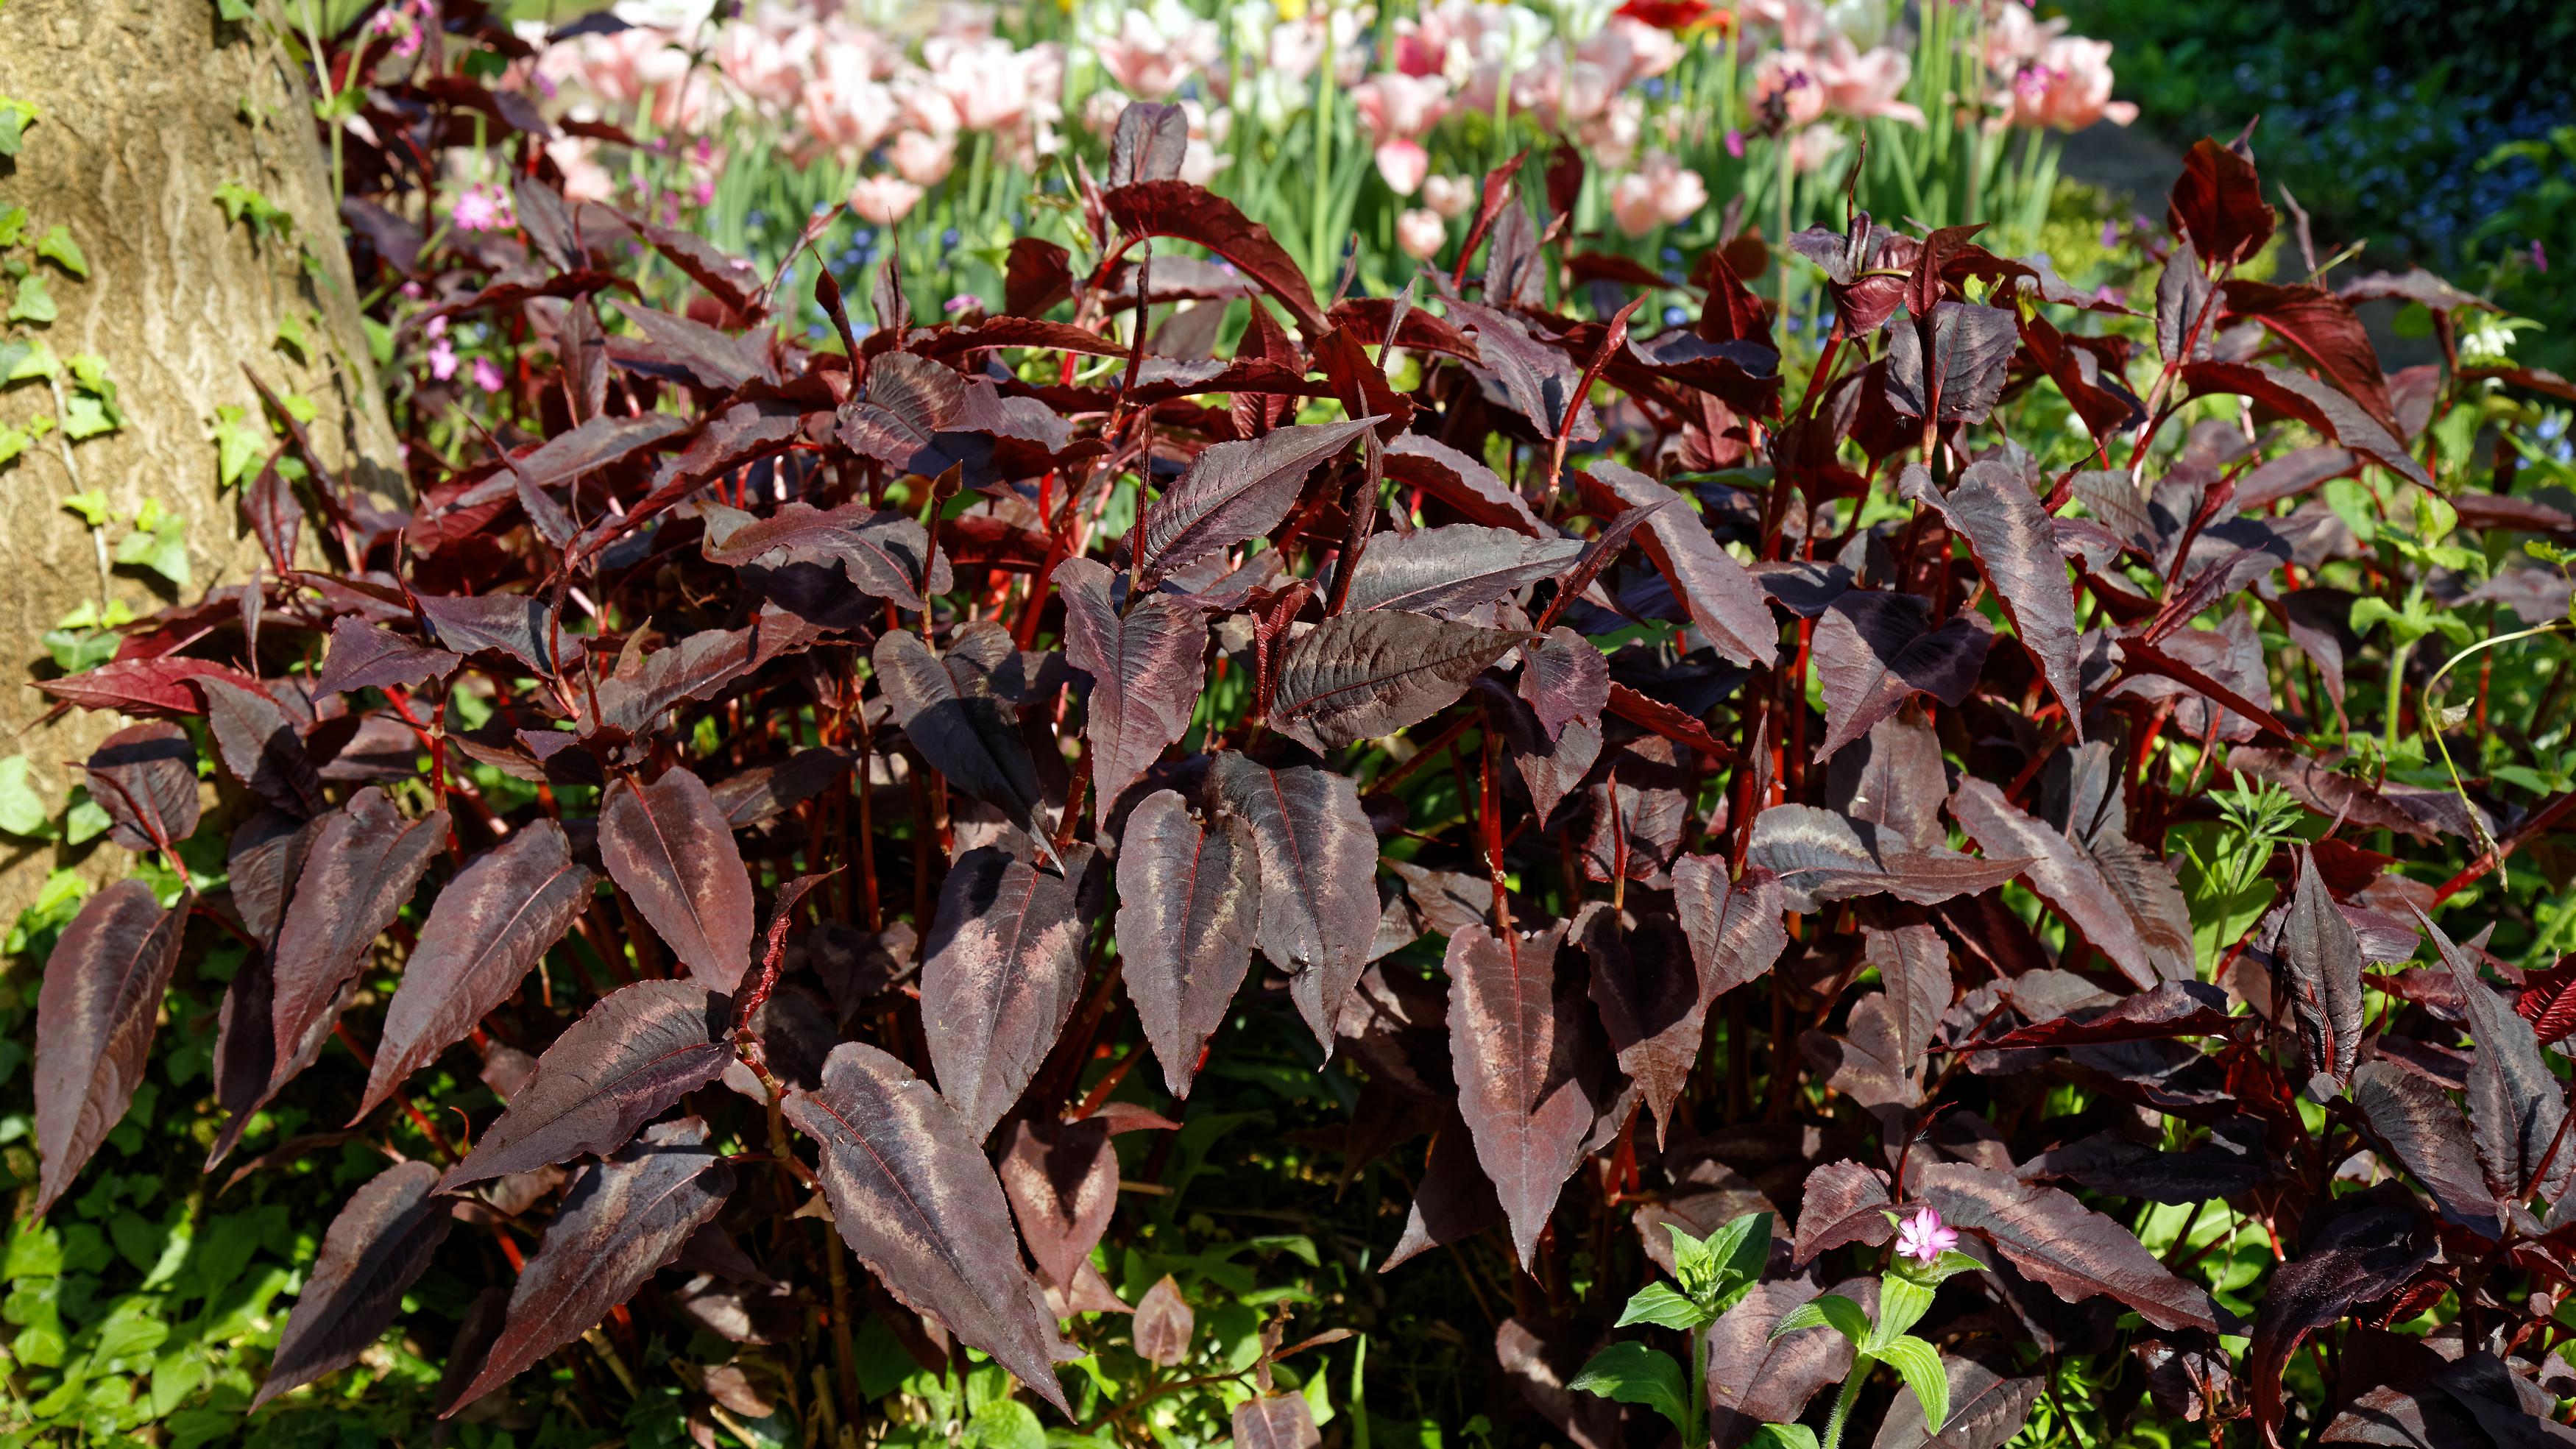 Burgundy-gray leaves with burgundy petiole, stems and midrib, burgundy buds.